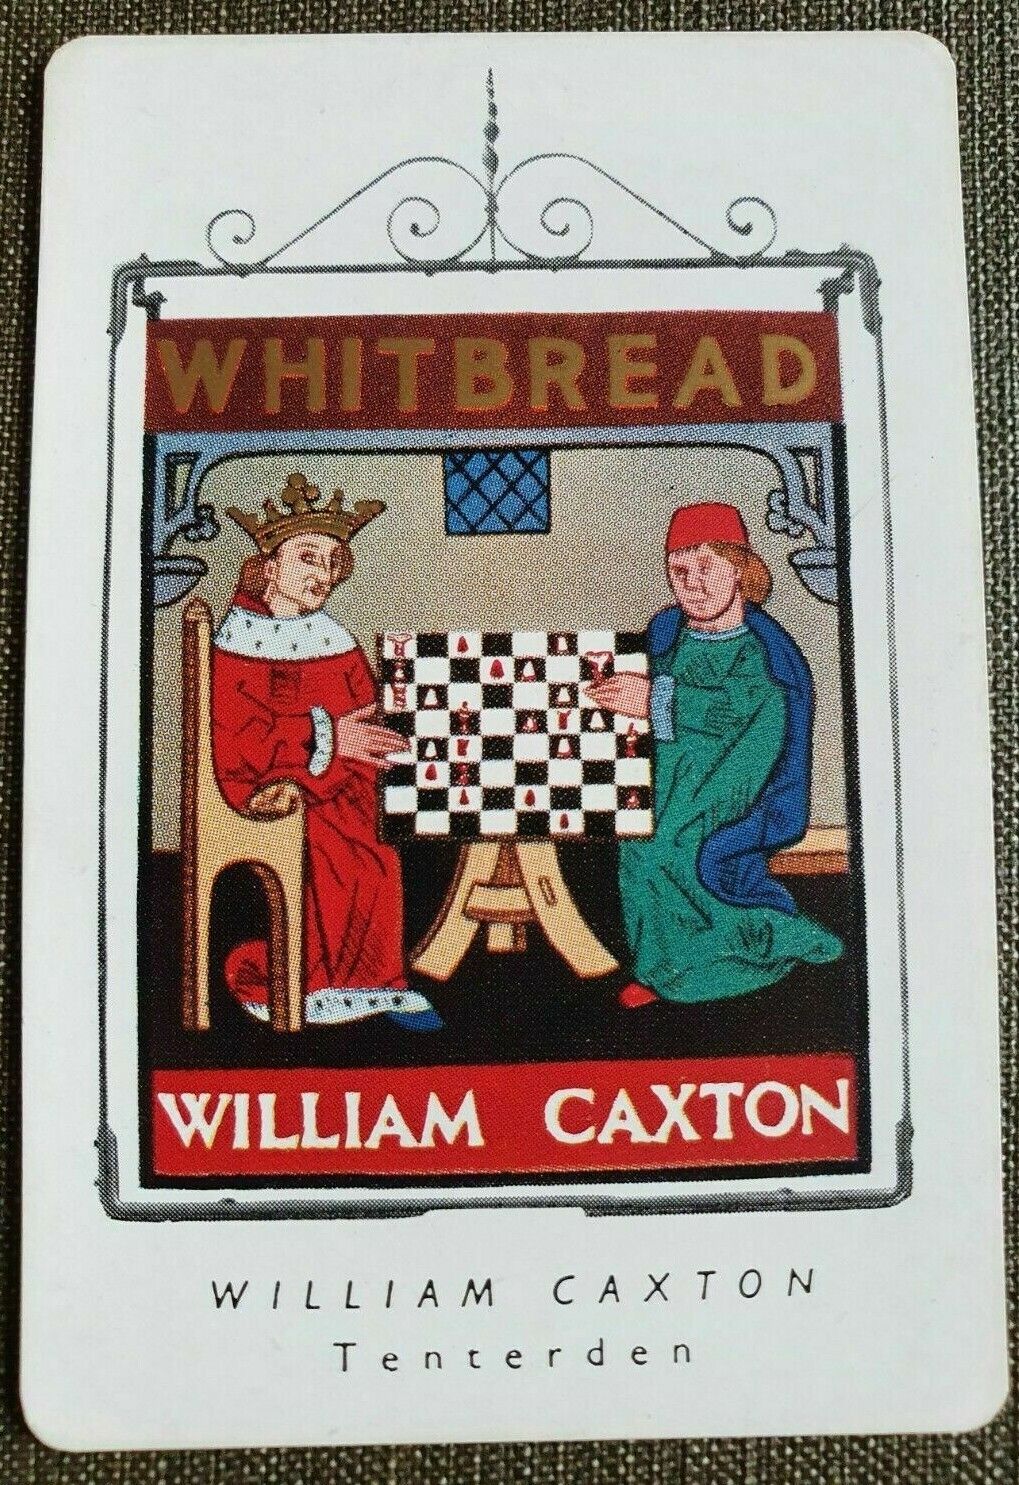 RARE ROUND CORNER WHITBREAD INN SIGN WILLIAM CAXTON 195I SPECIAL ISSUE MINT COND